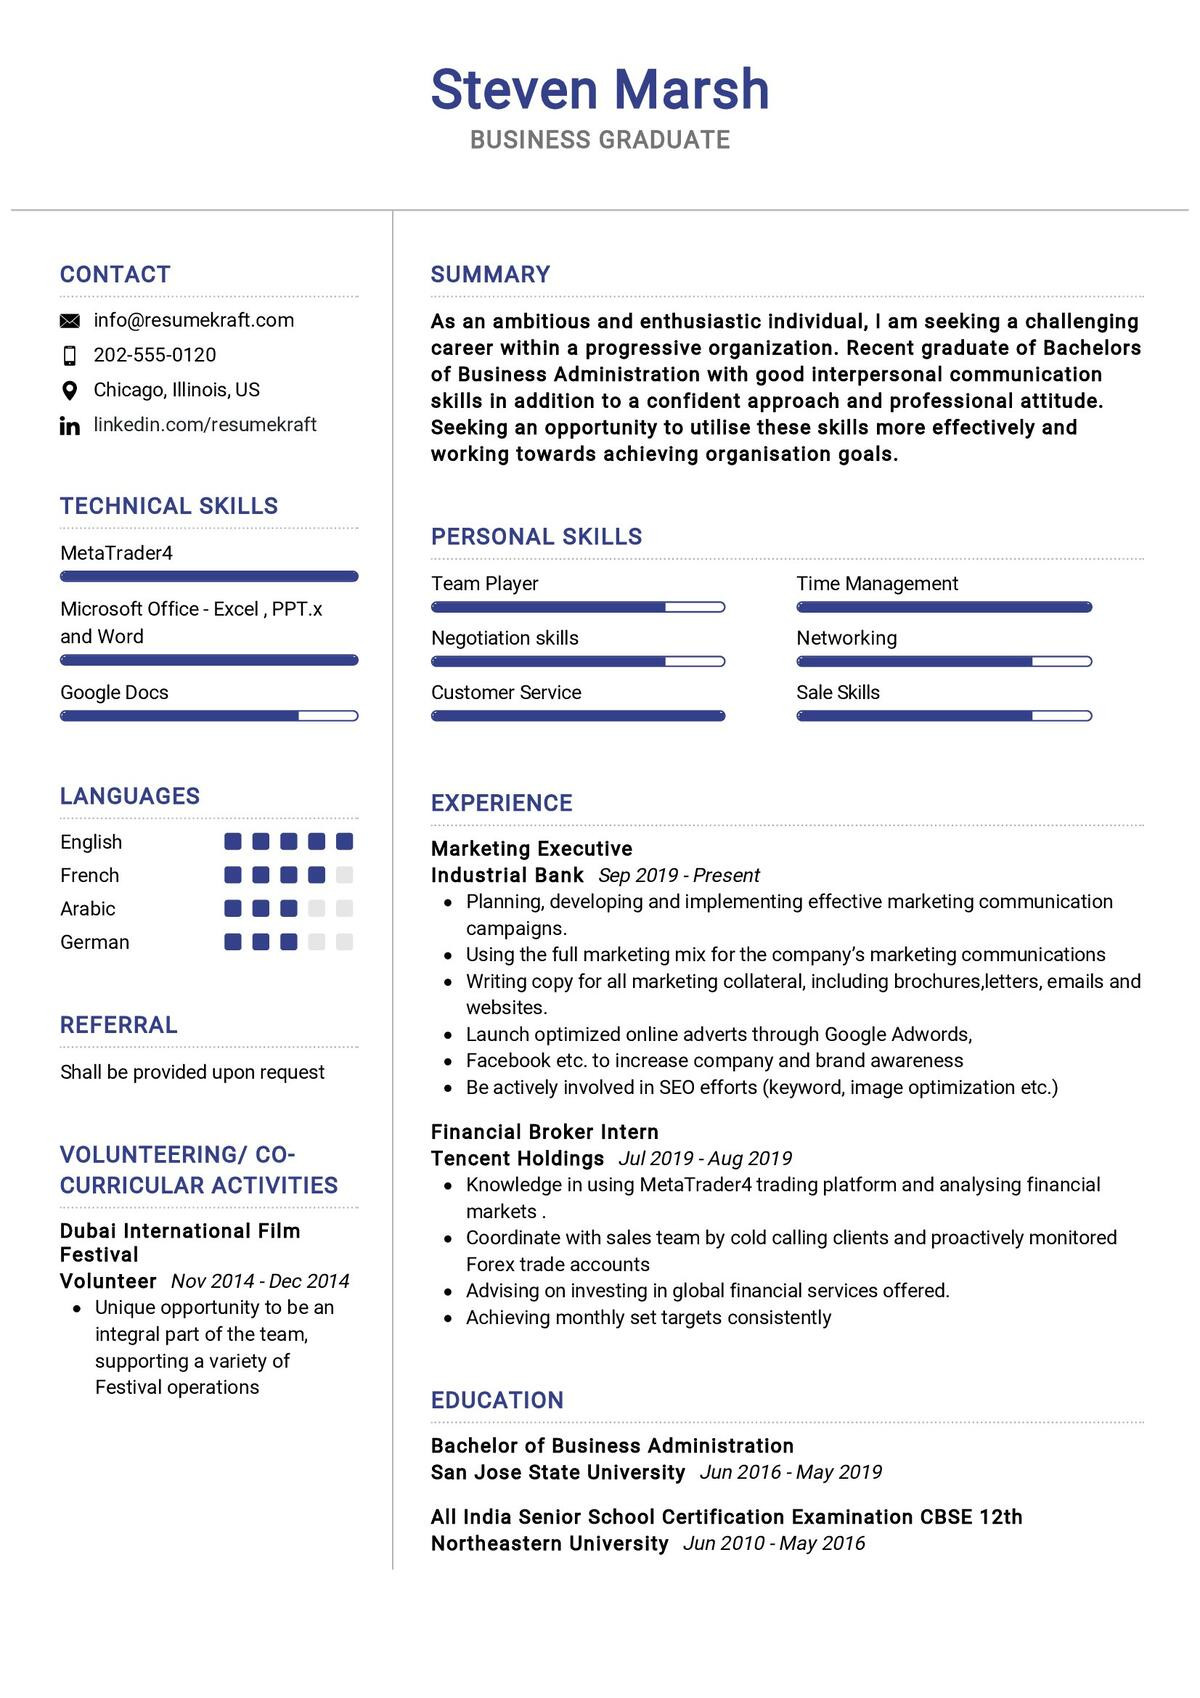 Resume for Masters Application Sample for International Students Business Graduate Resume Sample 2022 Writing Tips – Resumekraft